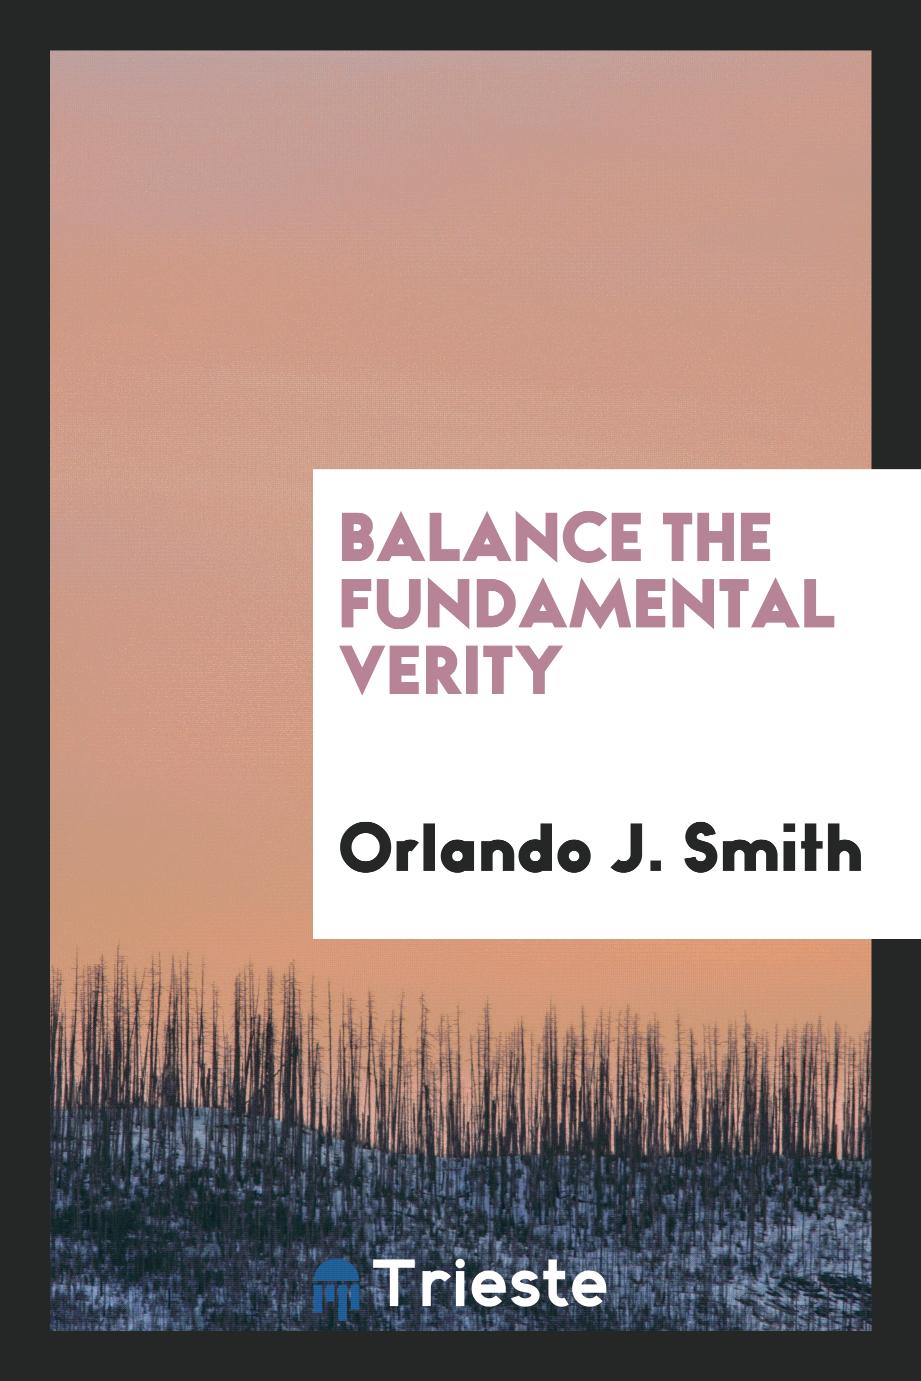 Balance the Fundamental Verity